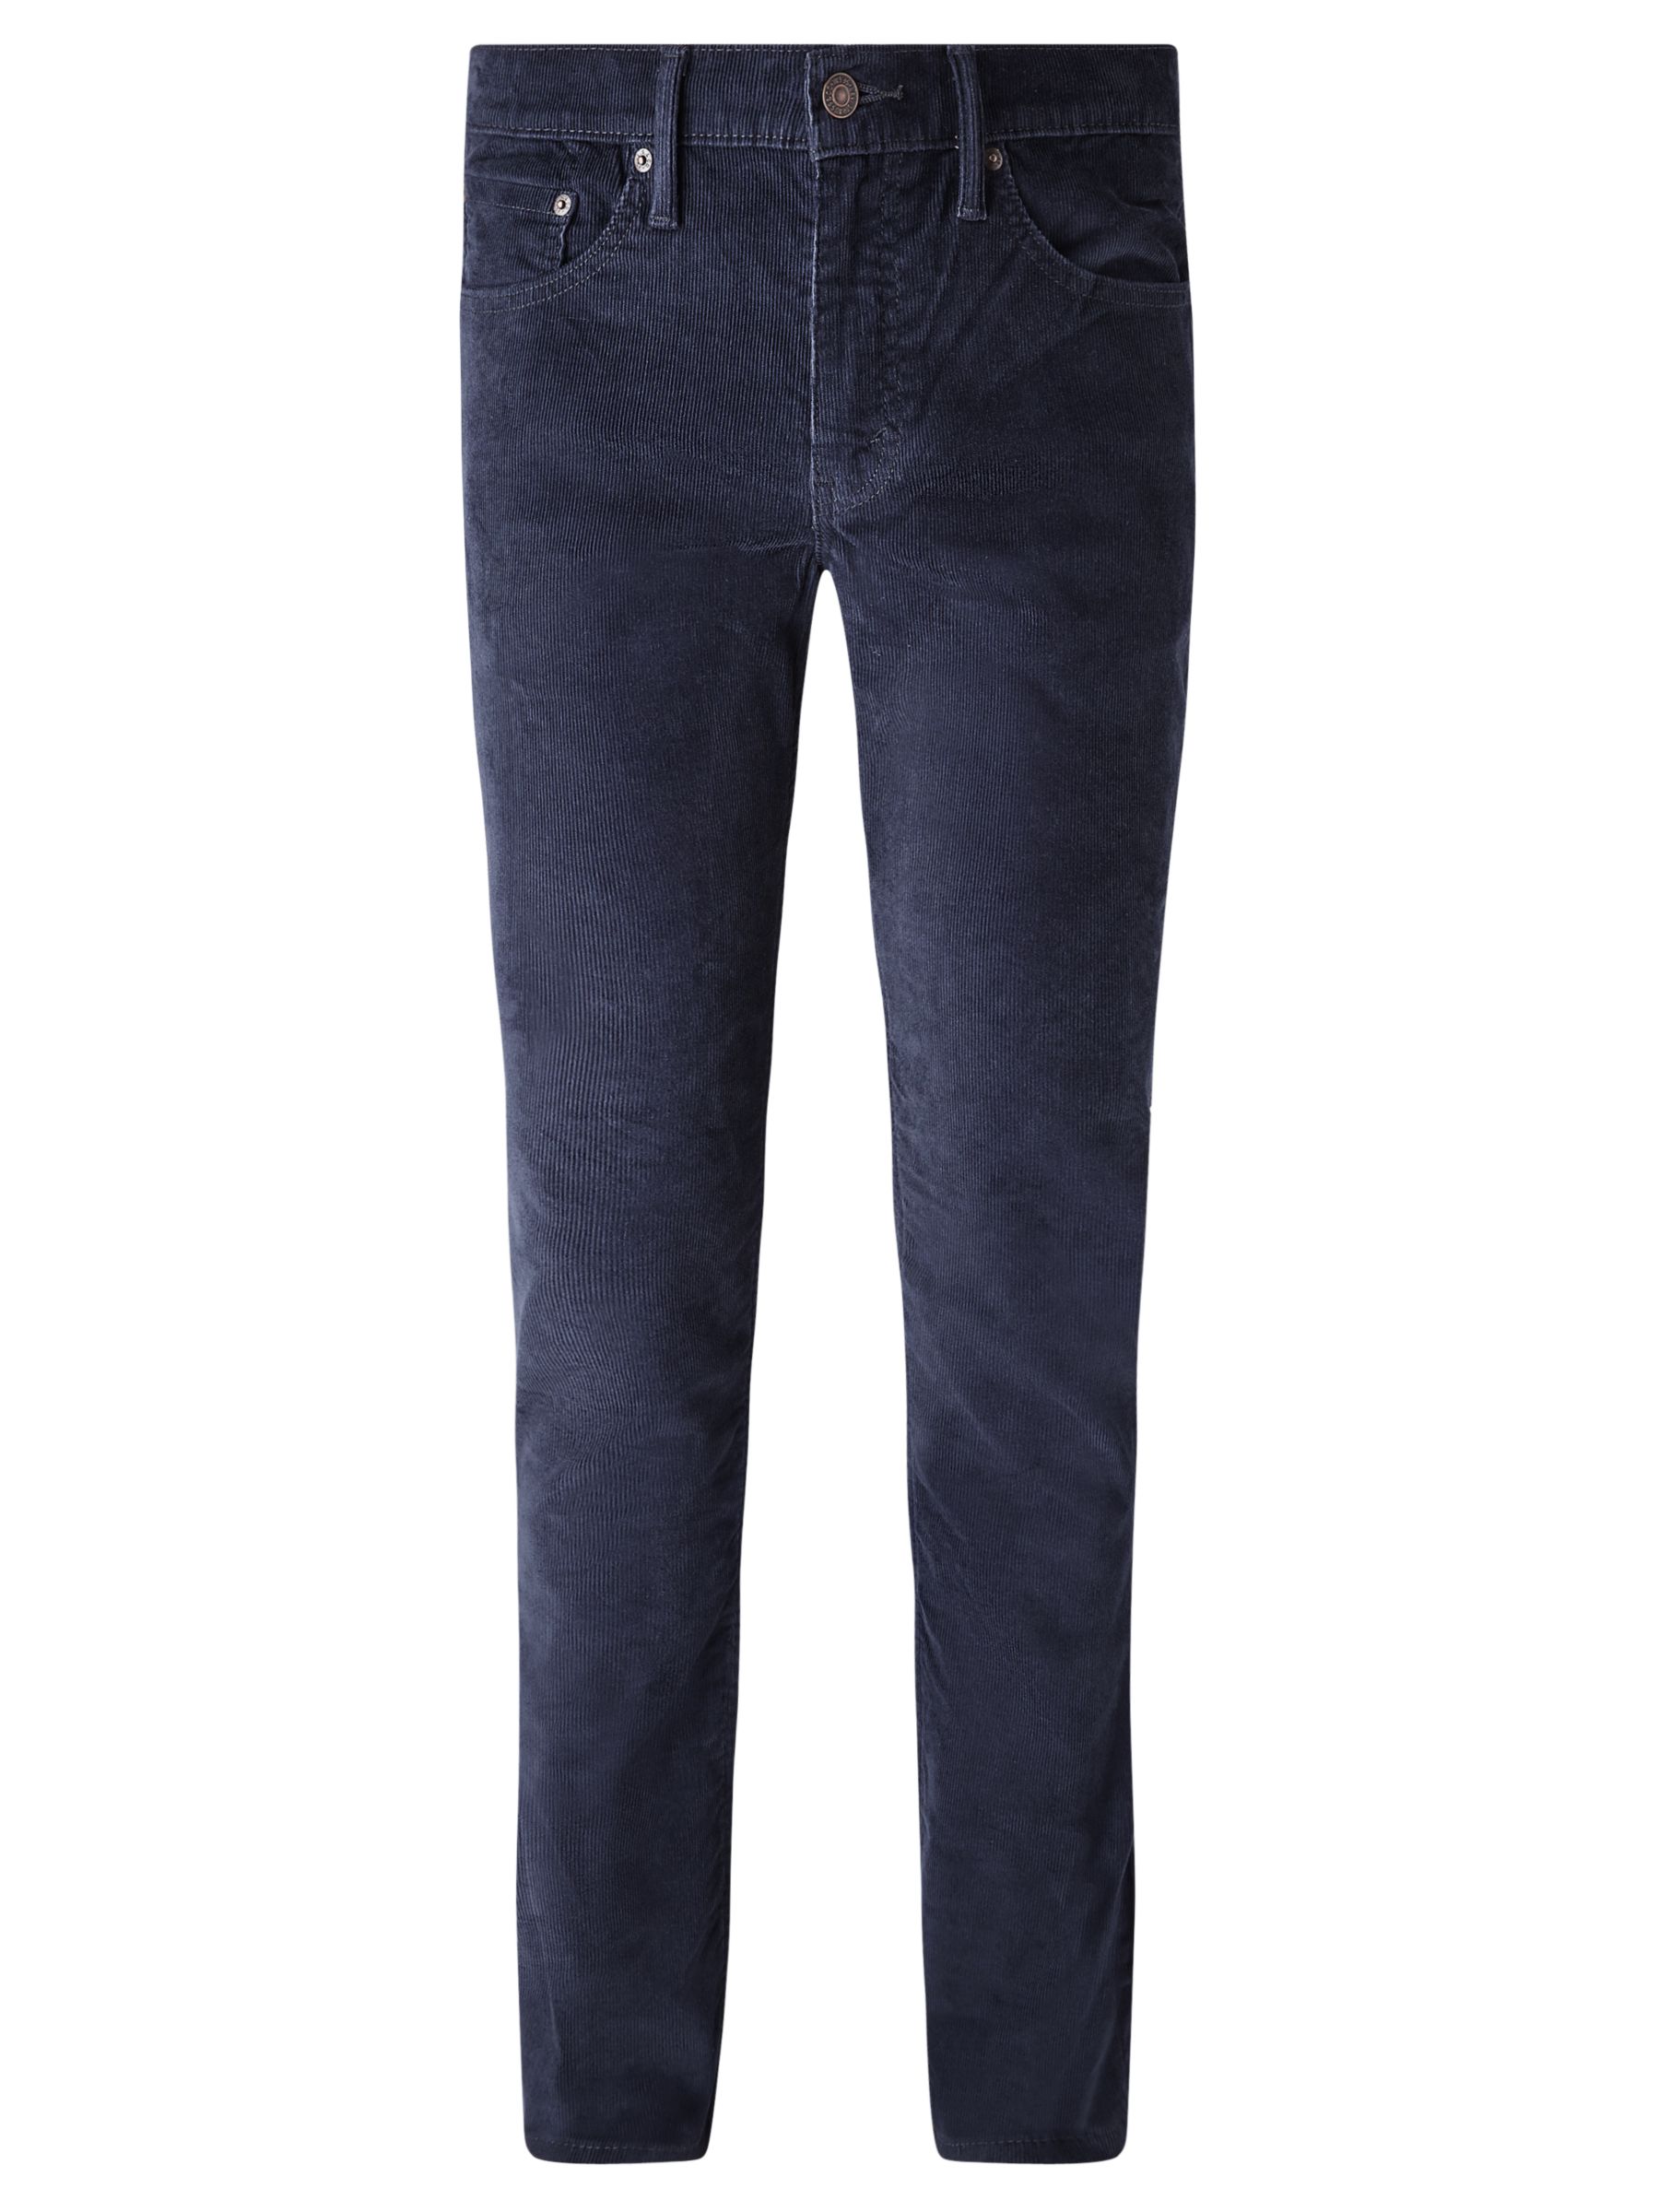 Levi's 511 Slim Fit Corduroy Trousers, Nightwatch Blue